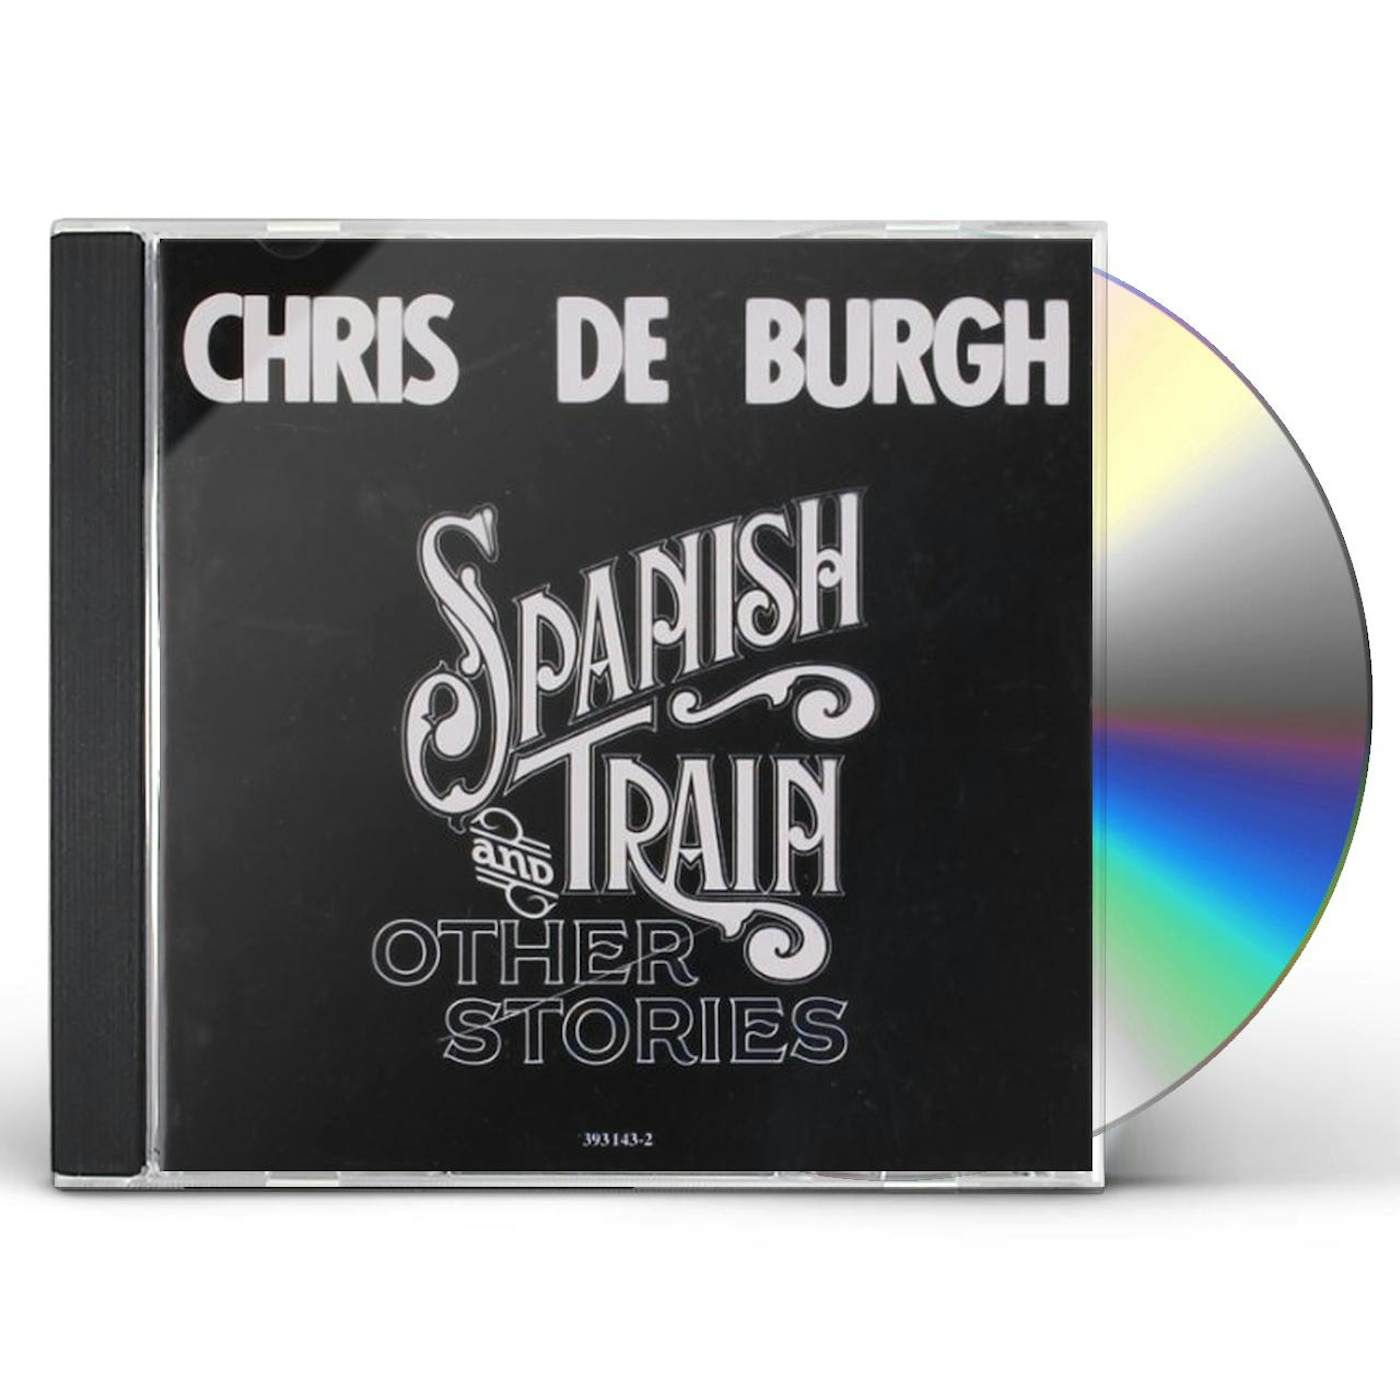 Chris de Burgh SPANISH TRAIN CD